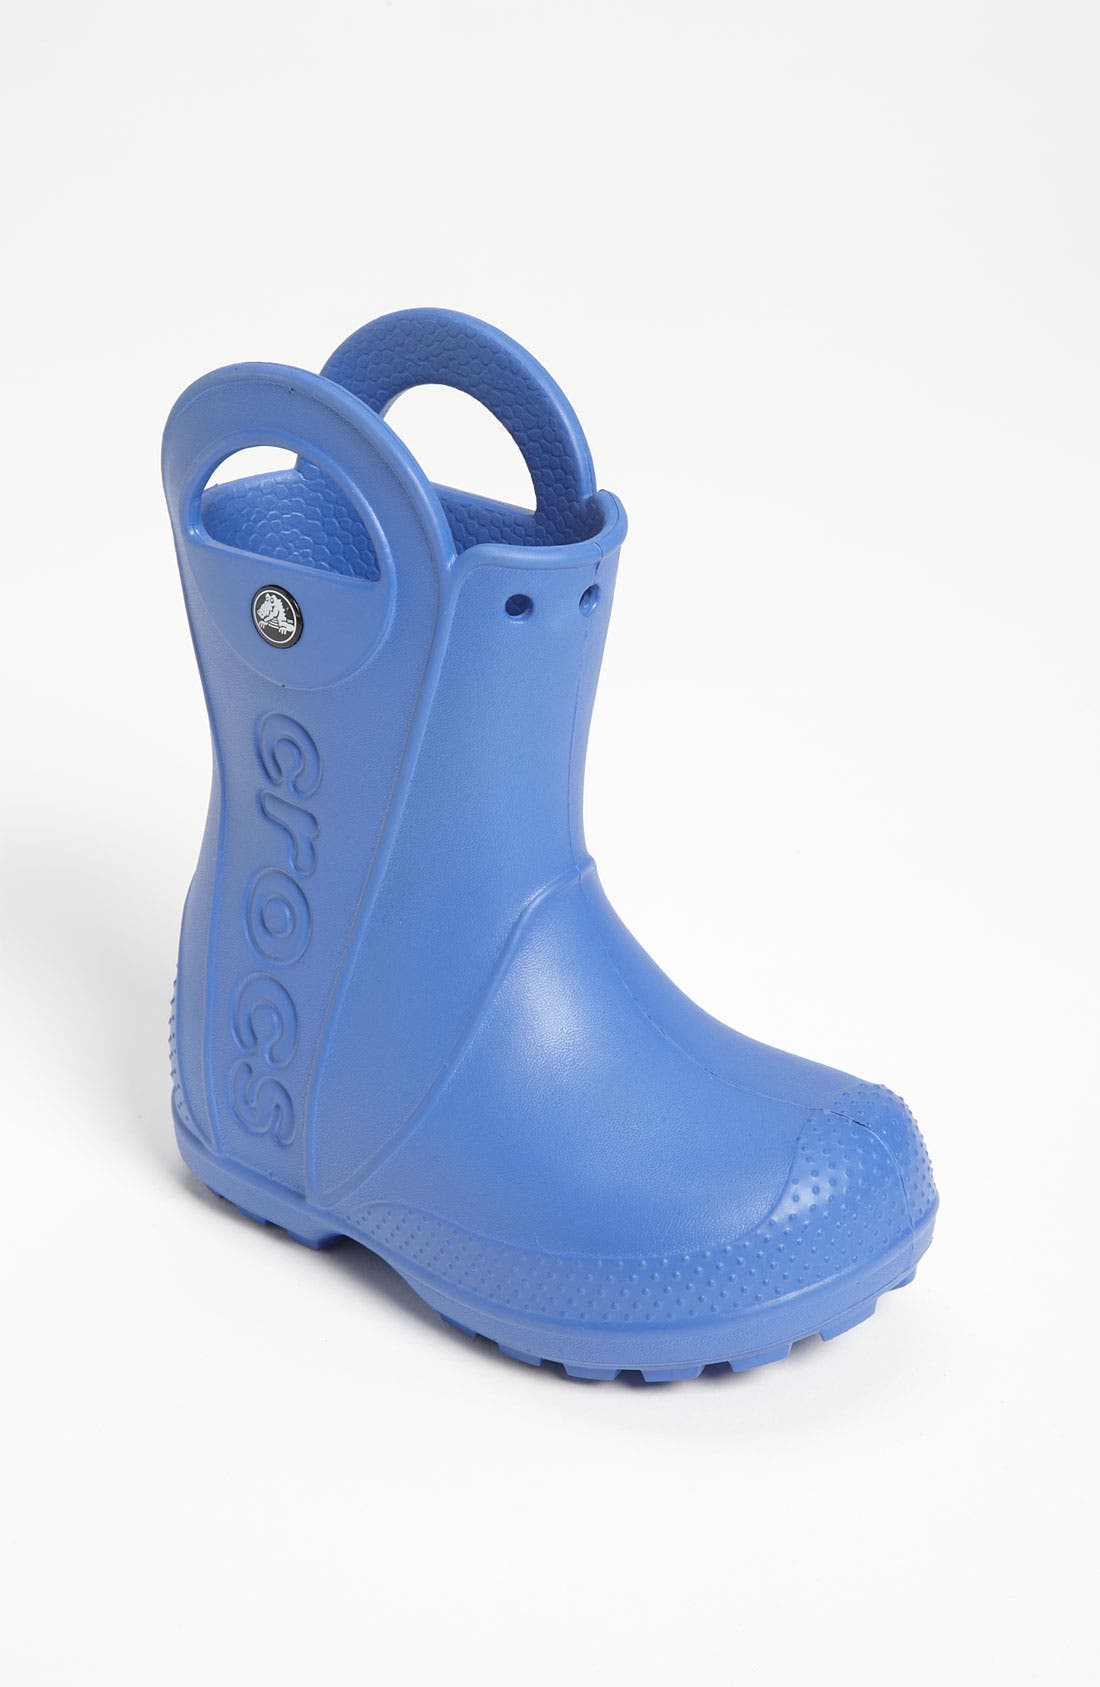 handle it rain boot crocs